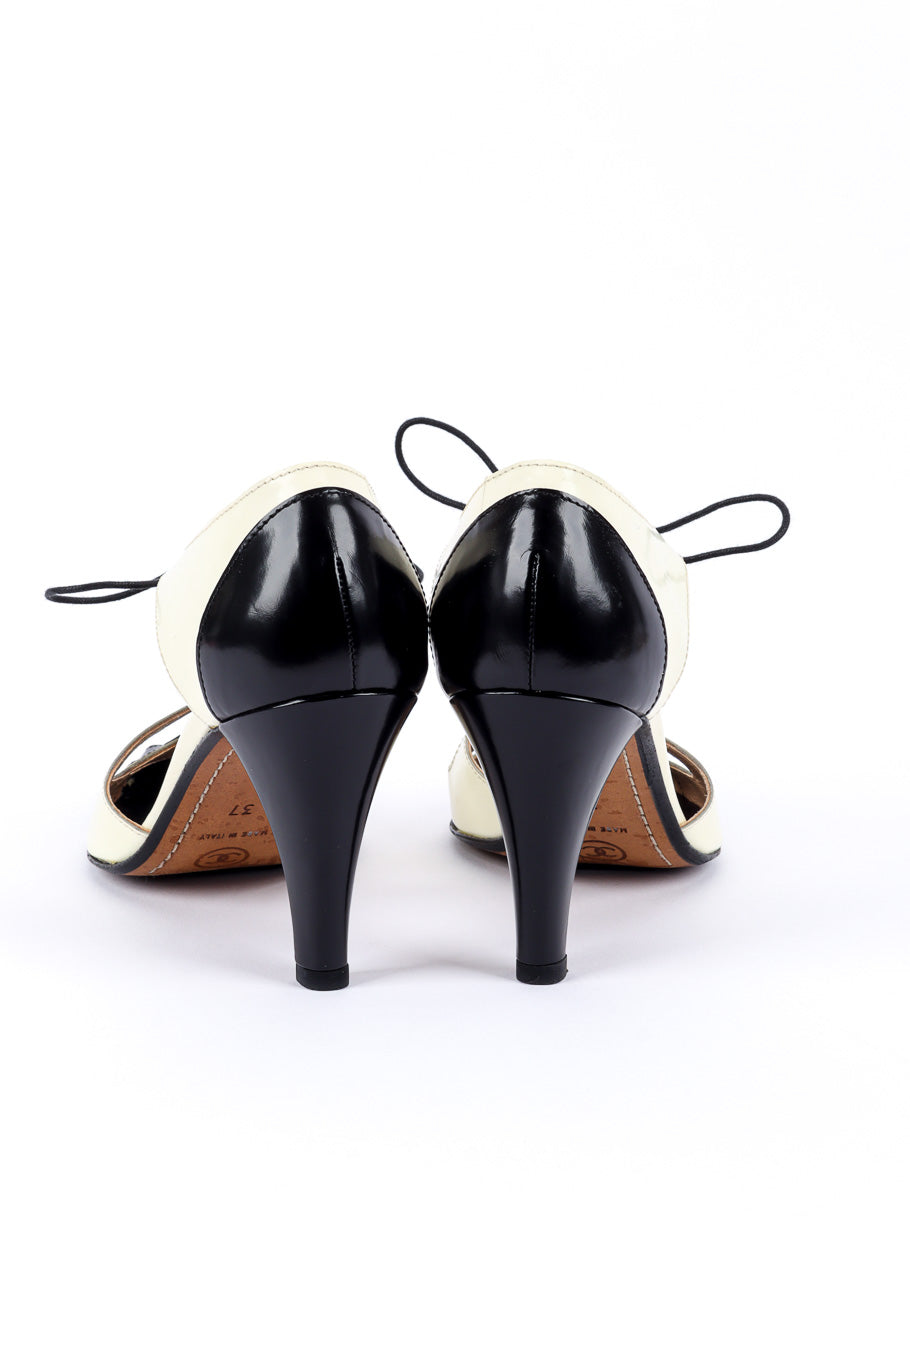 Vintage Chanel Lace Up Heels back heel view @recessla